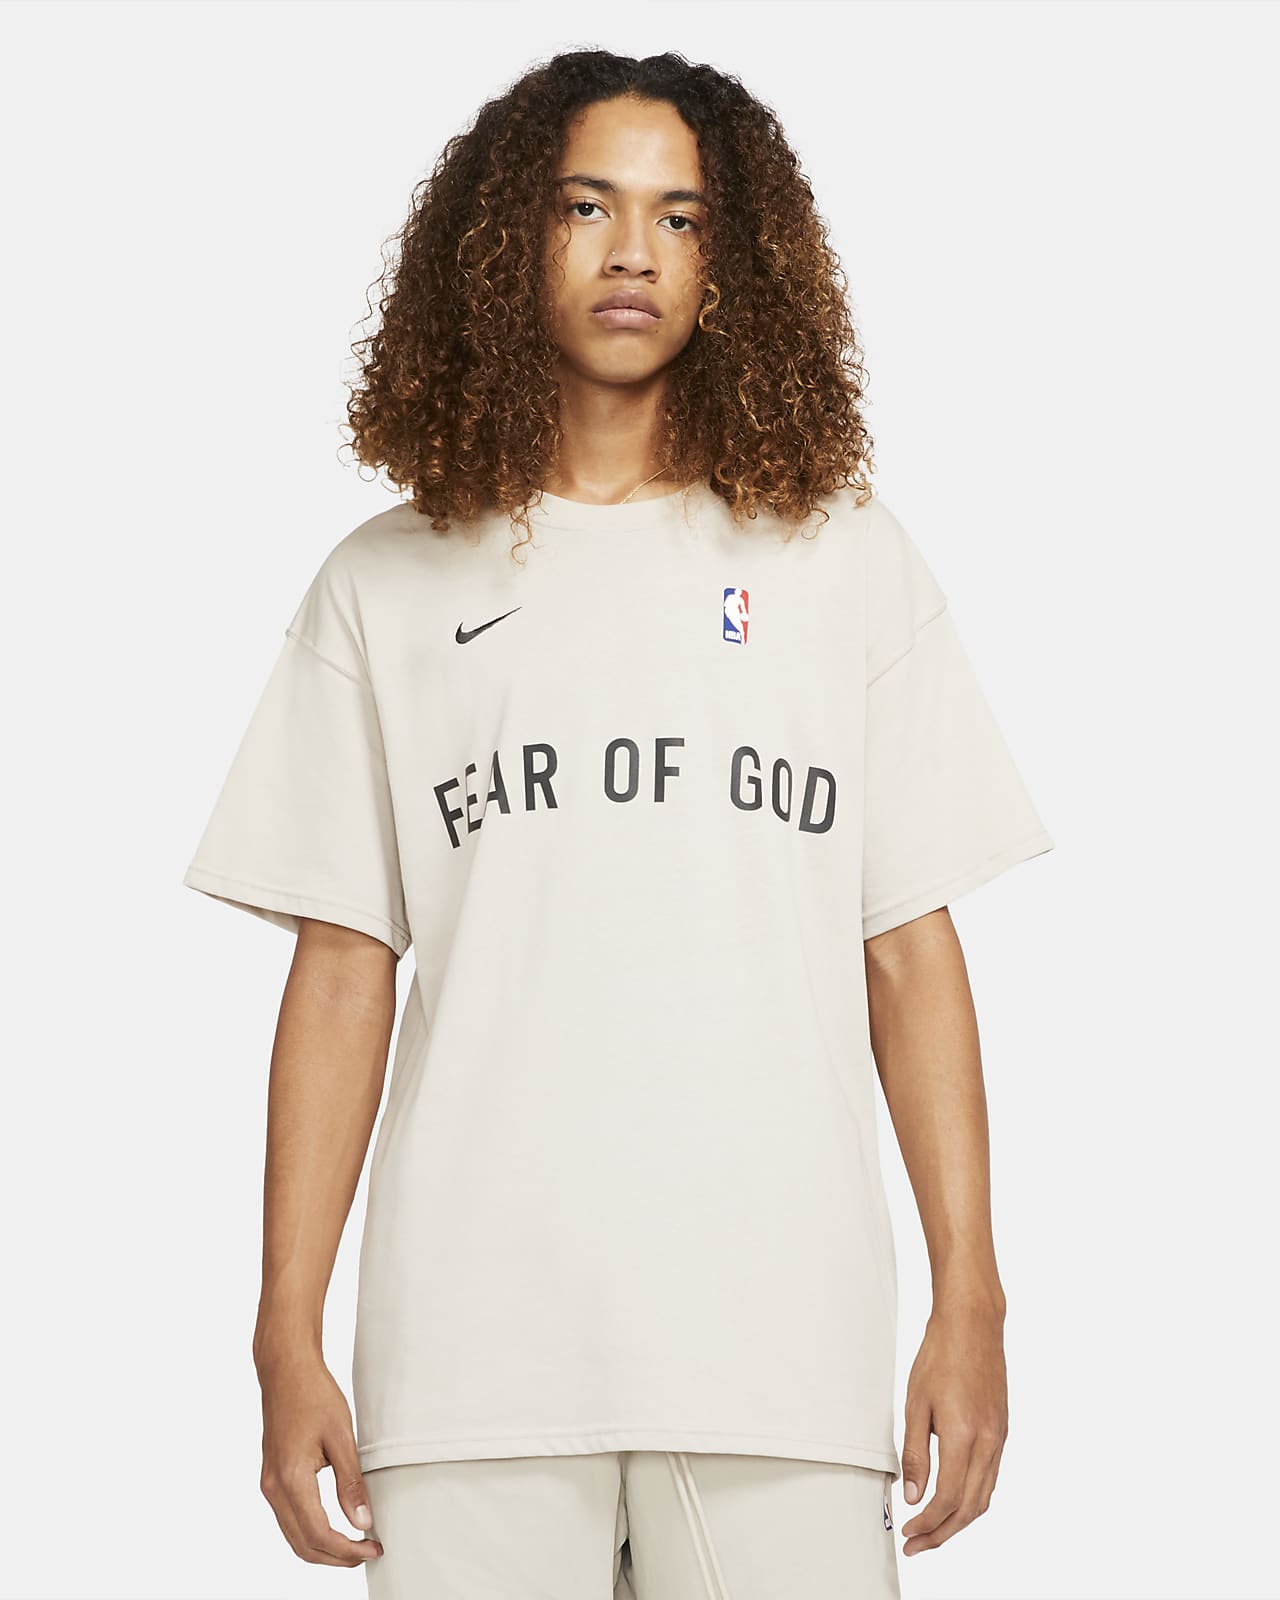 fear of god nike shirt